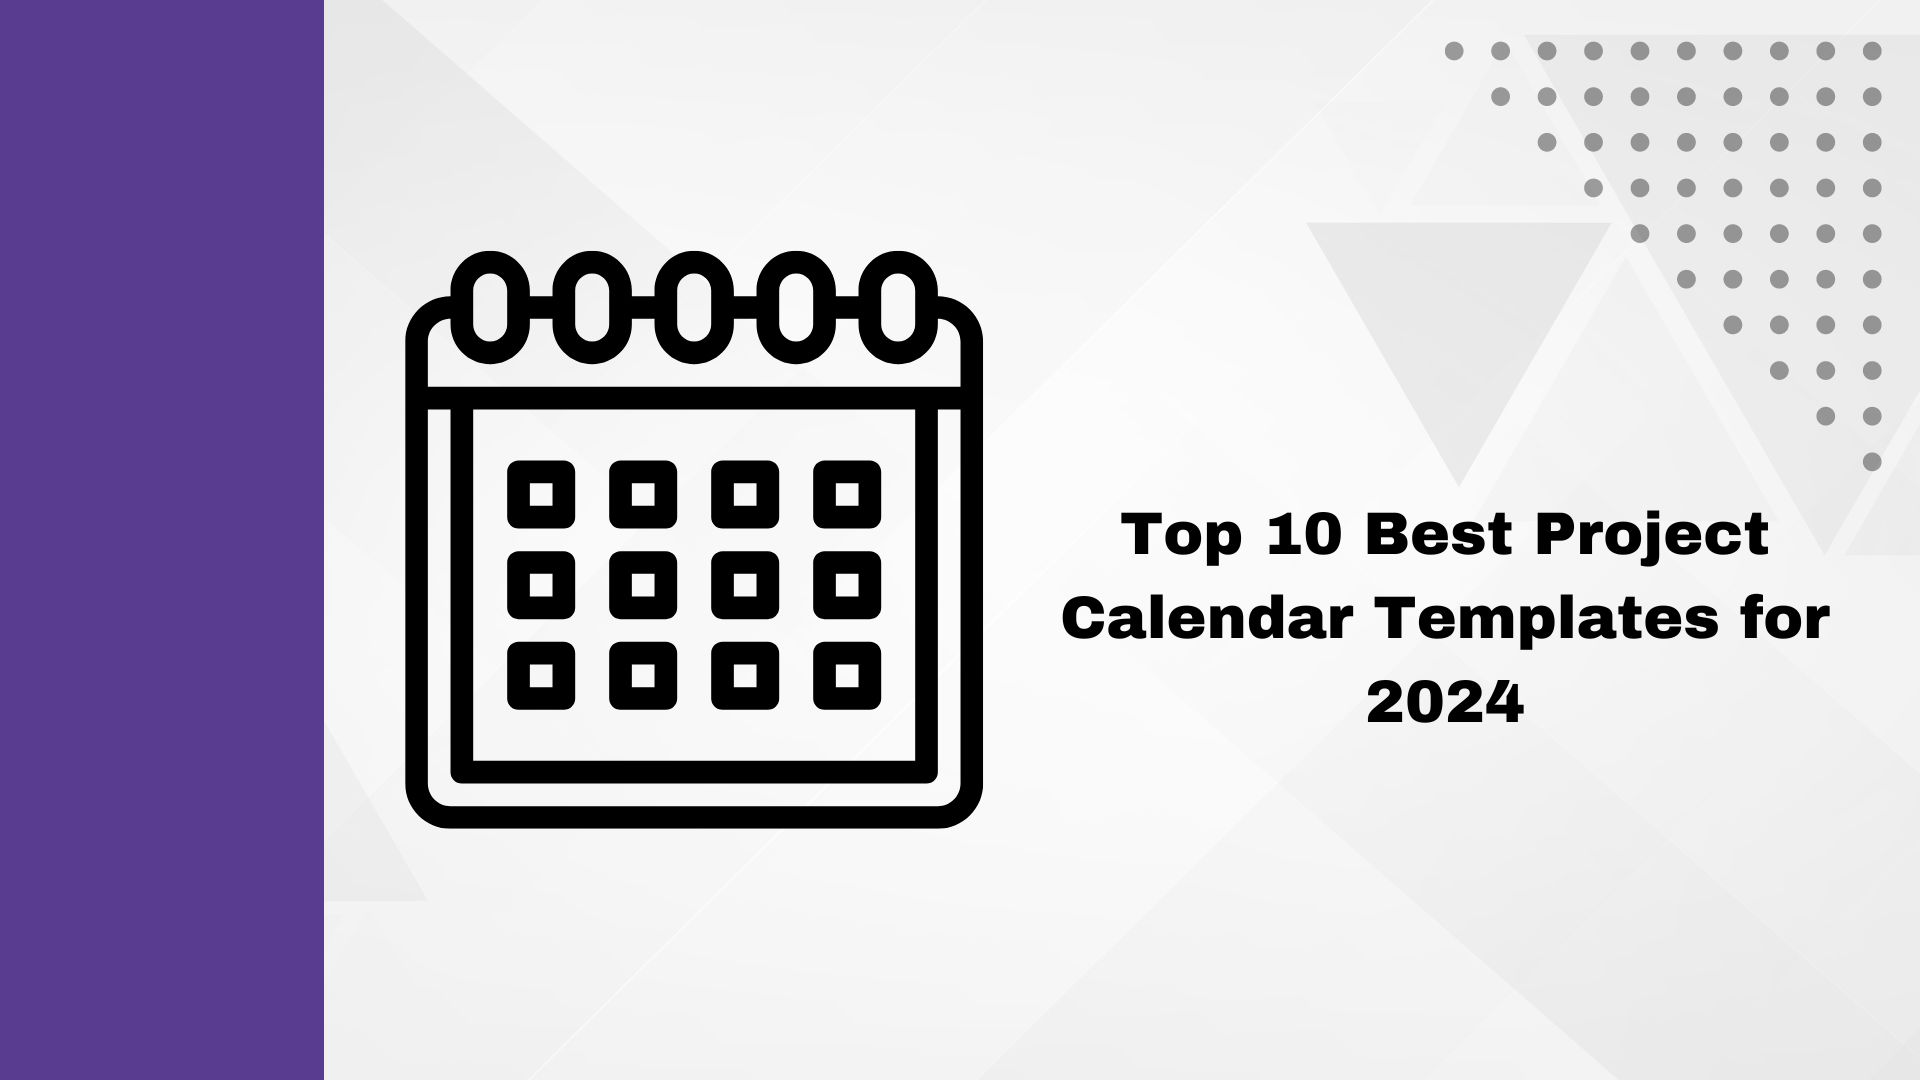 Top 10 Best Project Calendar Templates for 2024